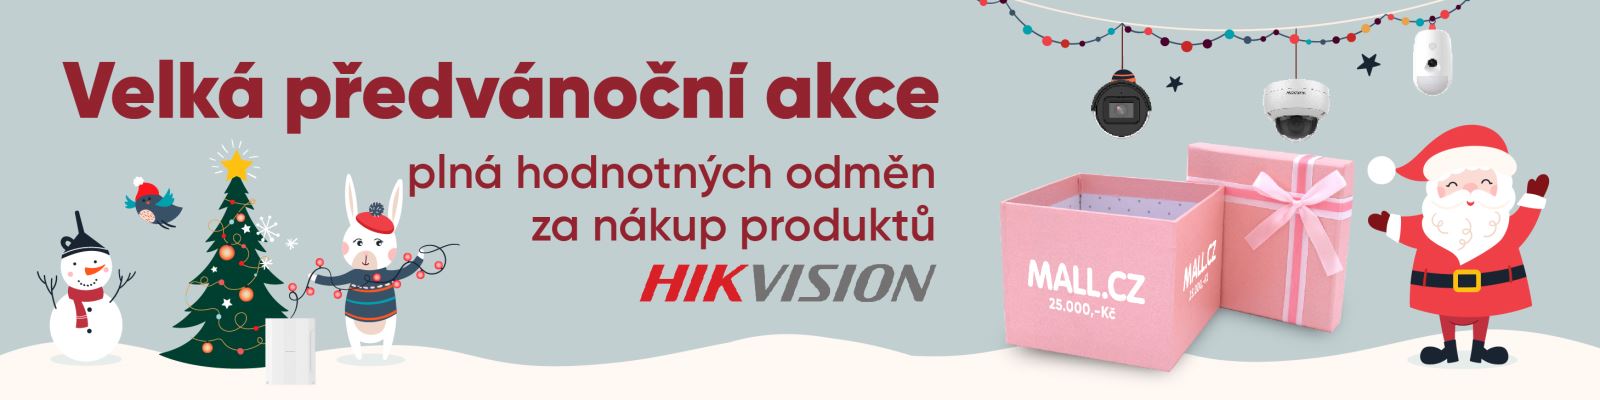 Hikvision akce